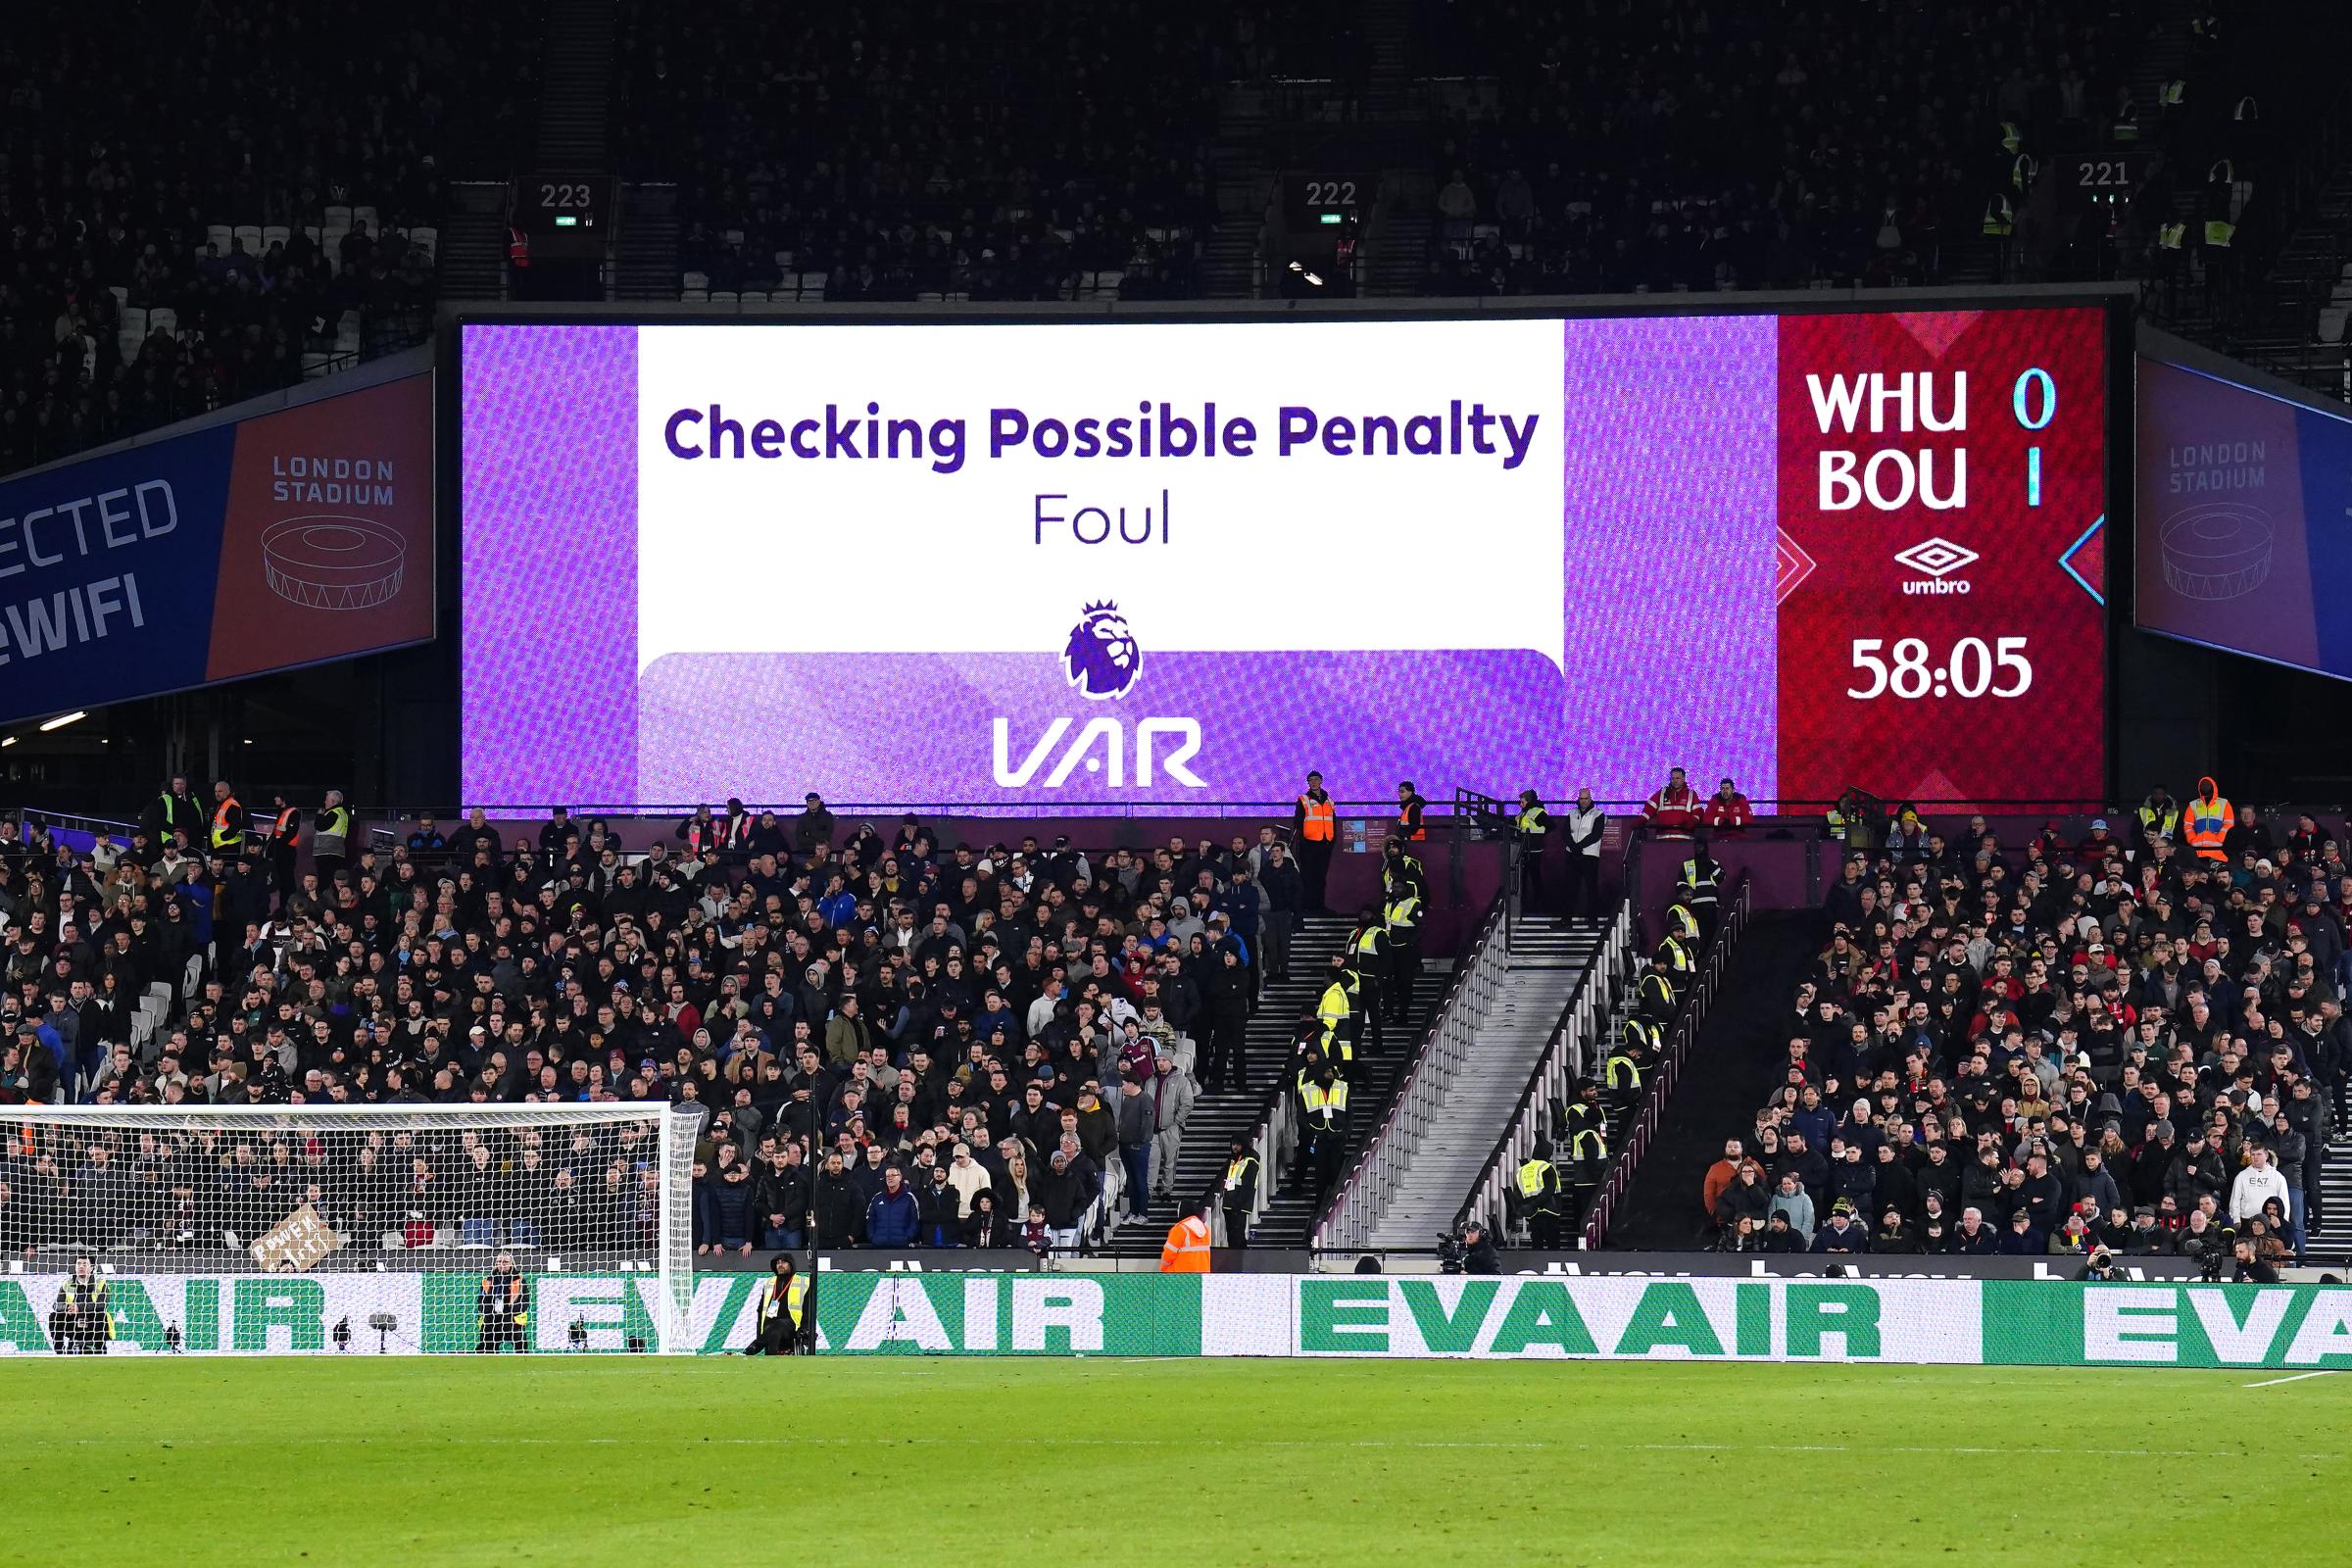 Premier League boss: VAR experience in stadium not good enough